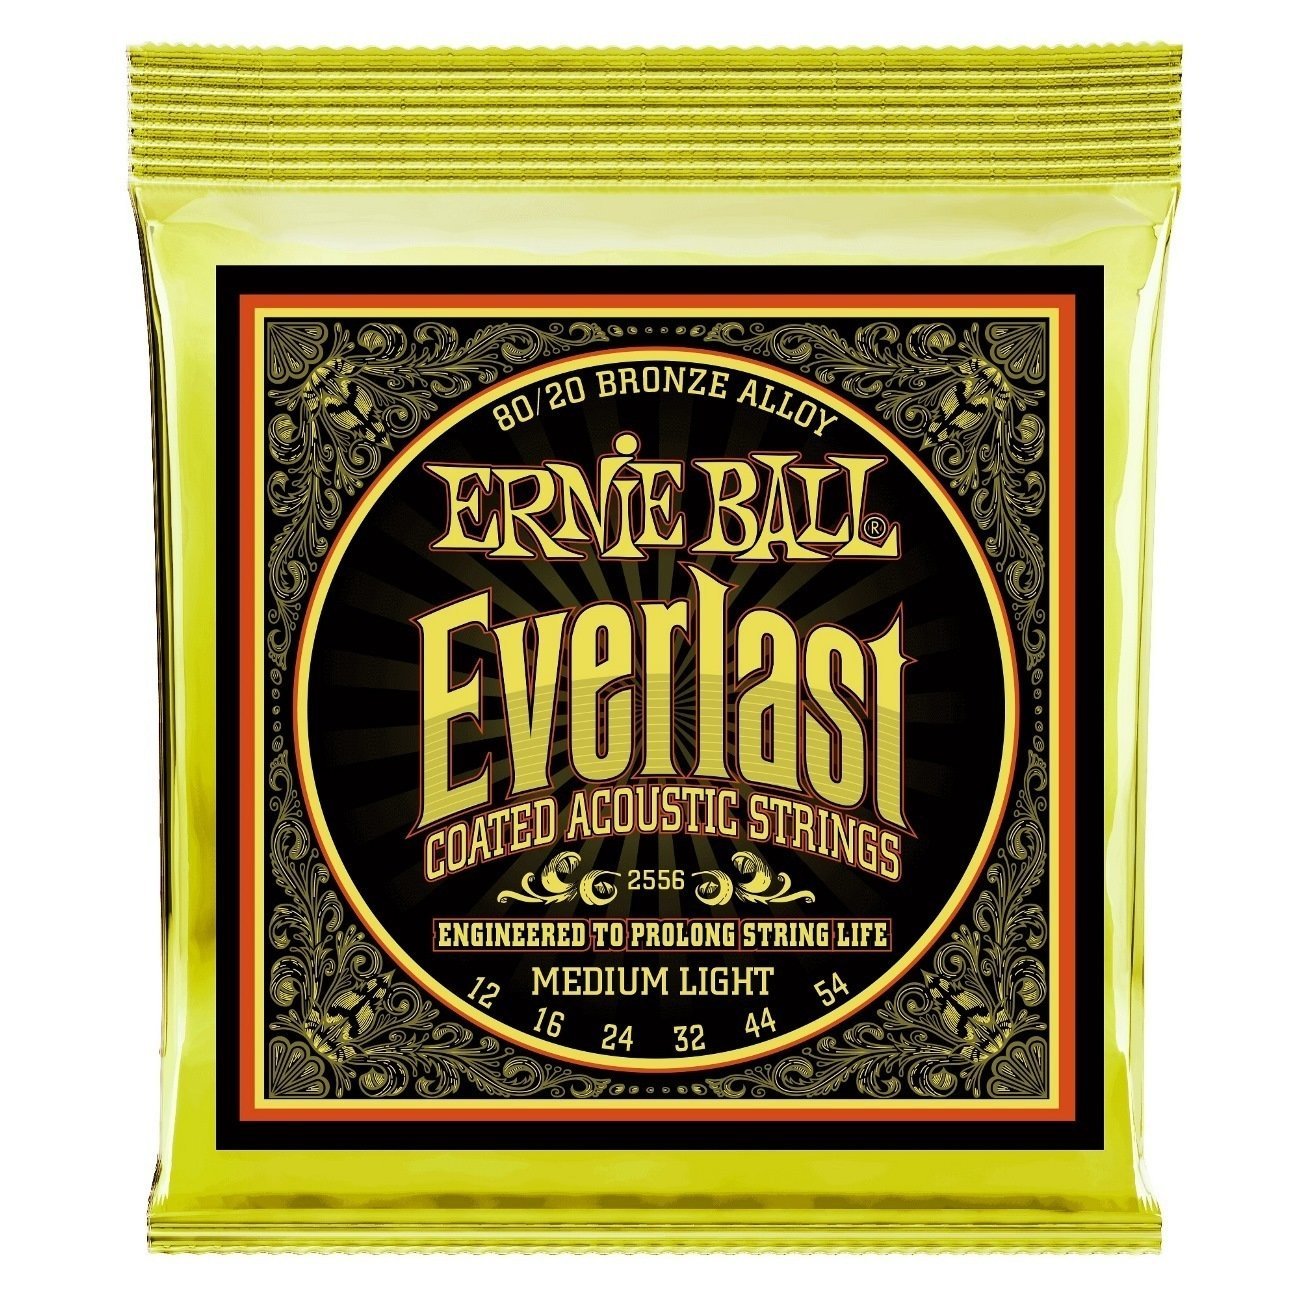 Guitar strings Ernie Ball 2556 Everlast